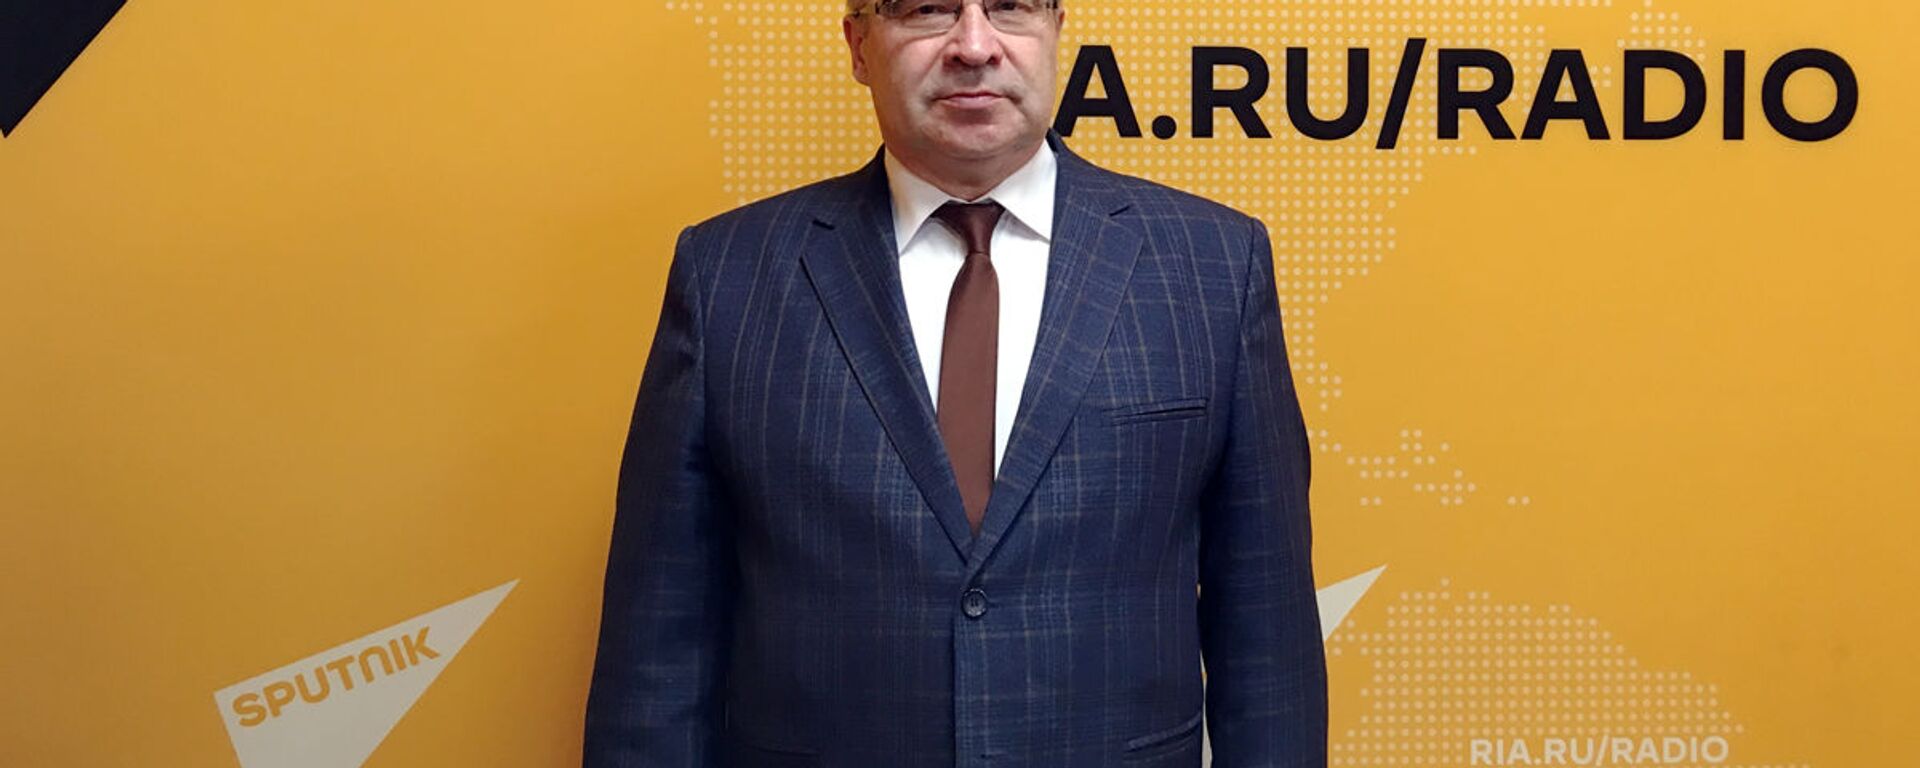 Андрей Кошкин - Sputnik Ўзбекистон, 1920, 24.04.2019